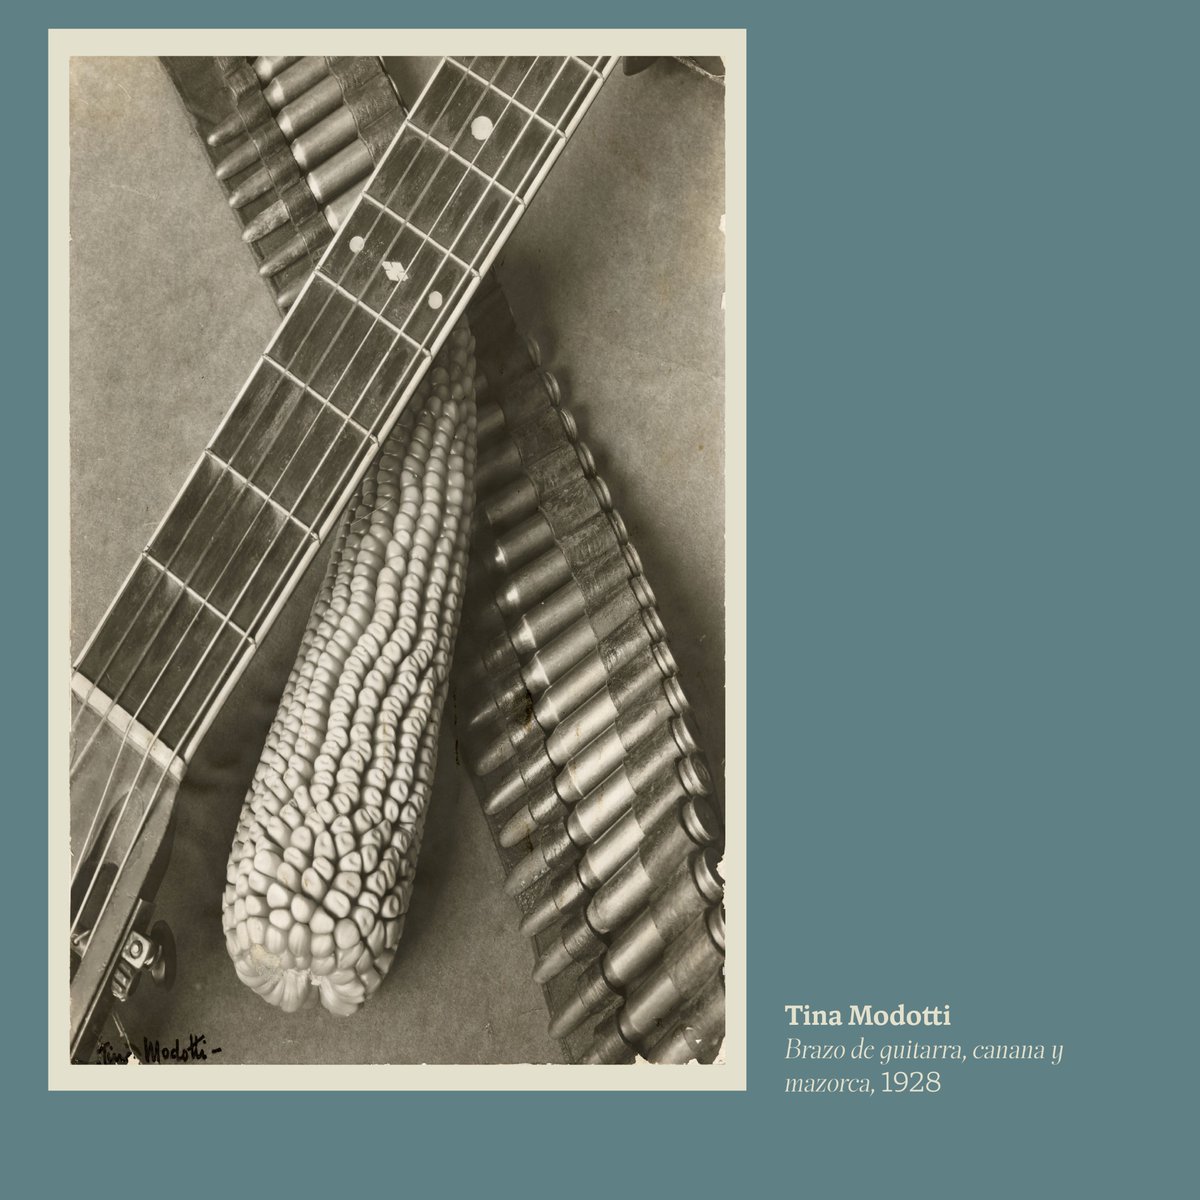 📷 #TinaModotti
Brazo de guitarra, canana y mazorca, 1928

#FotográficaMx